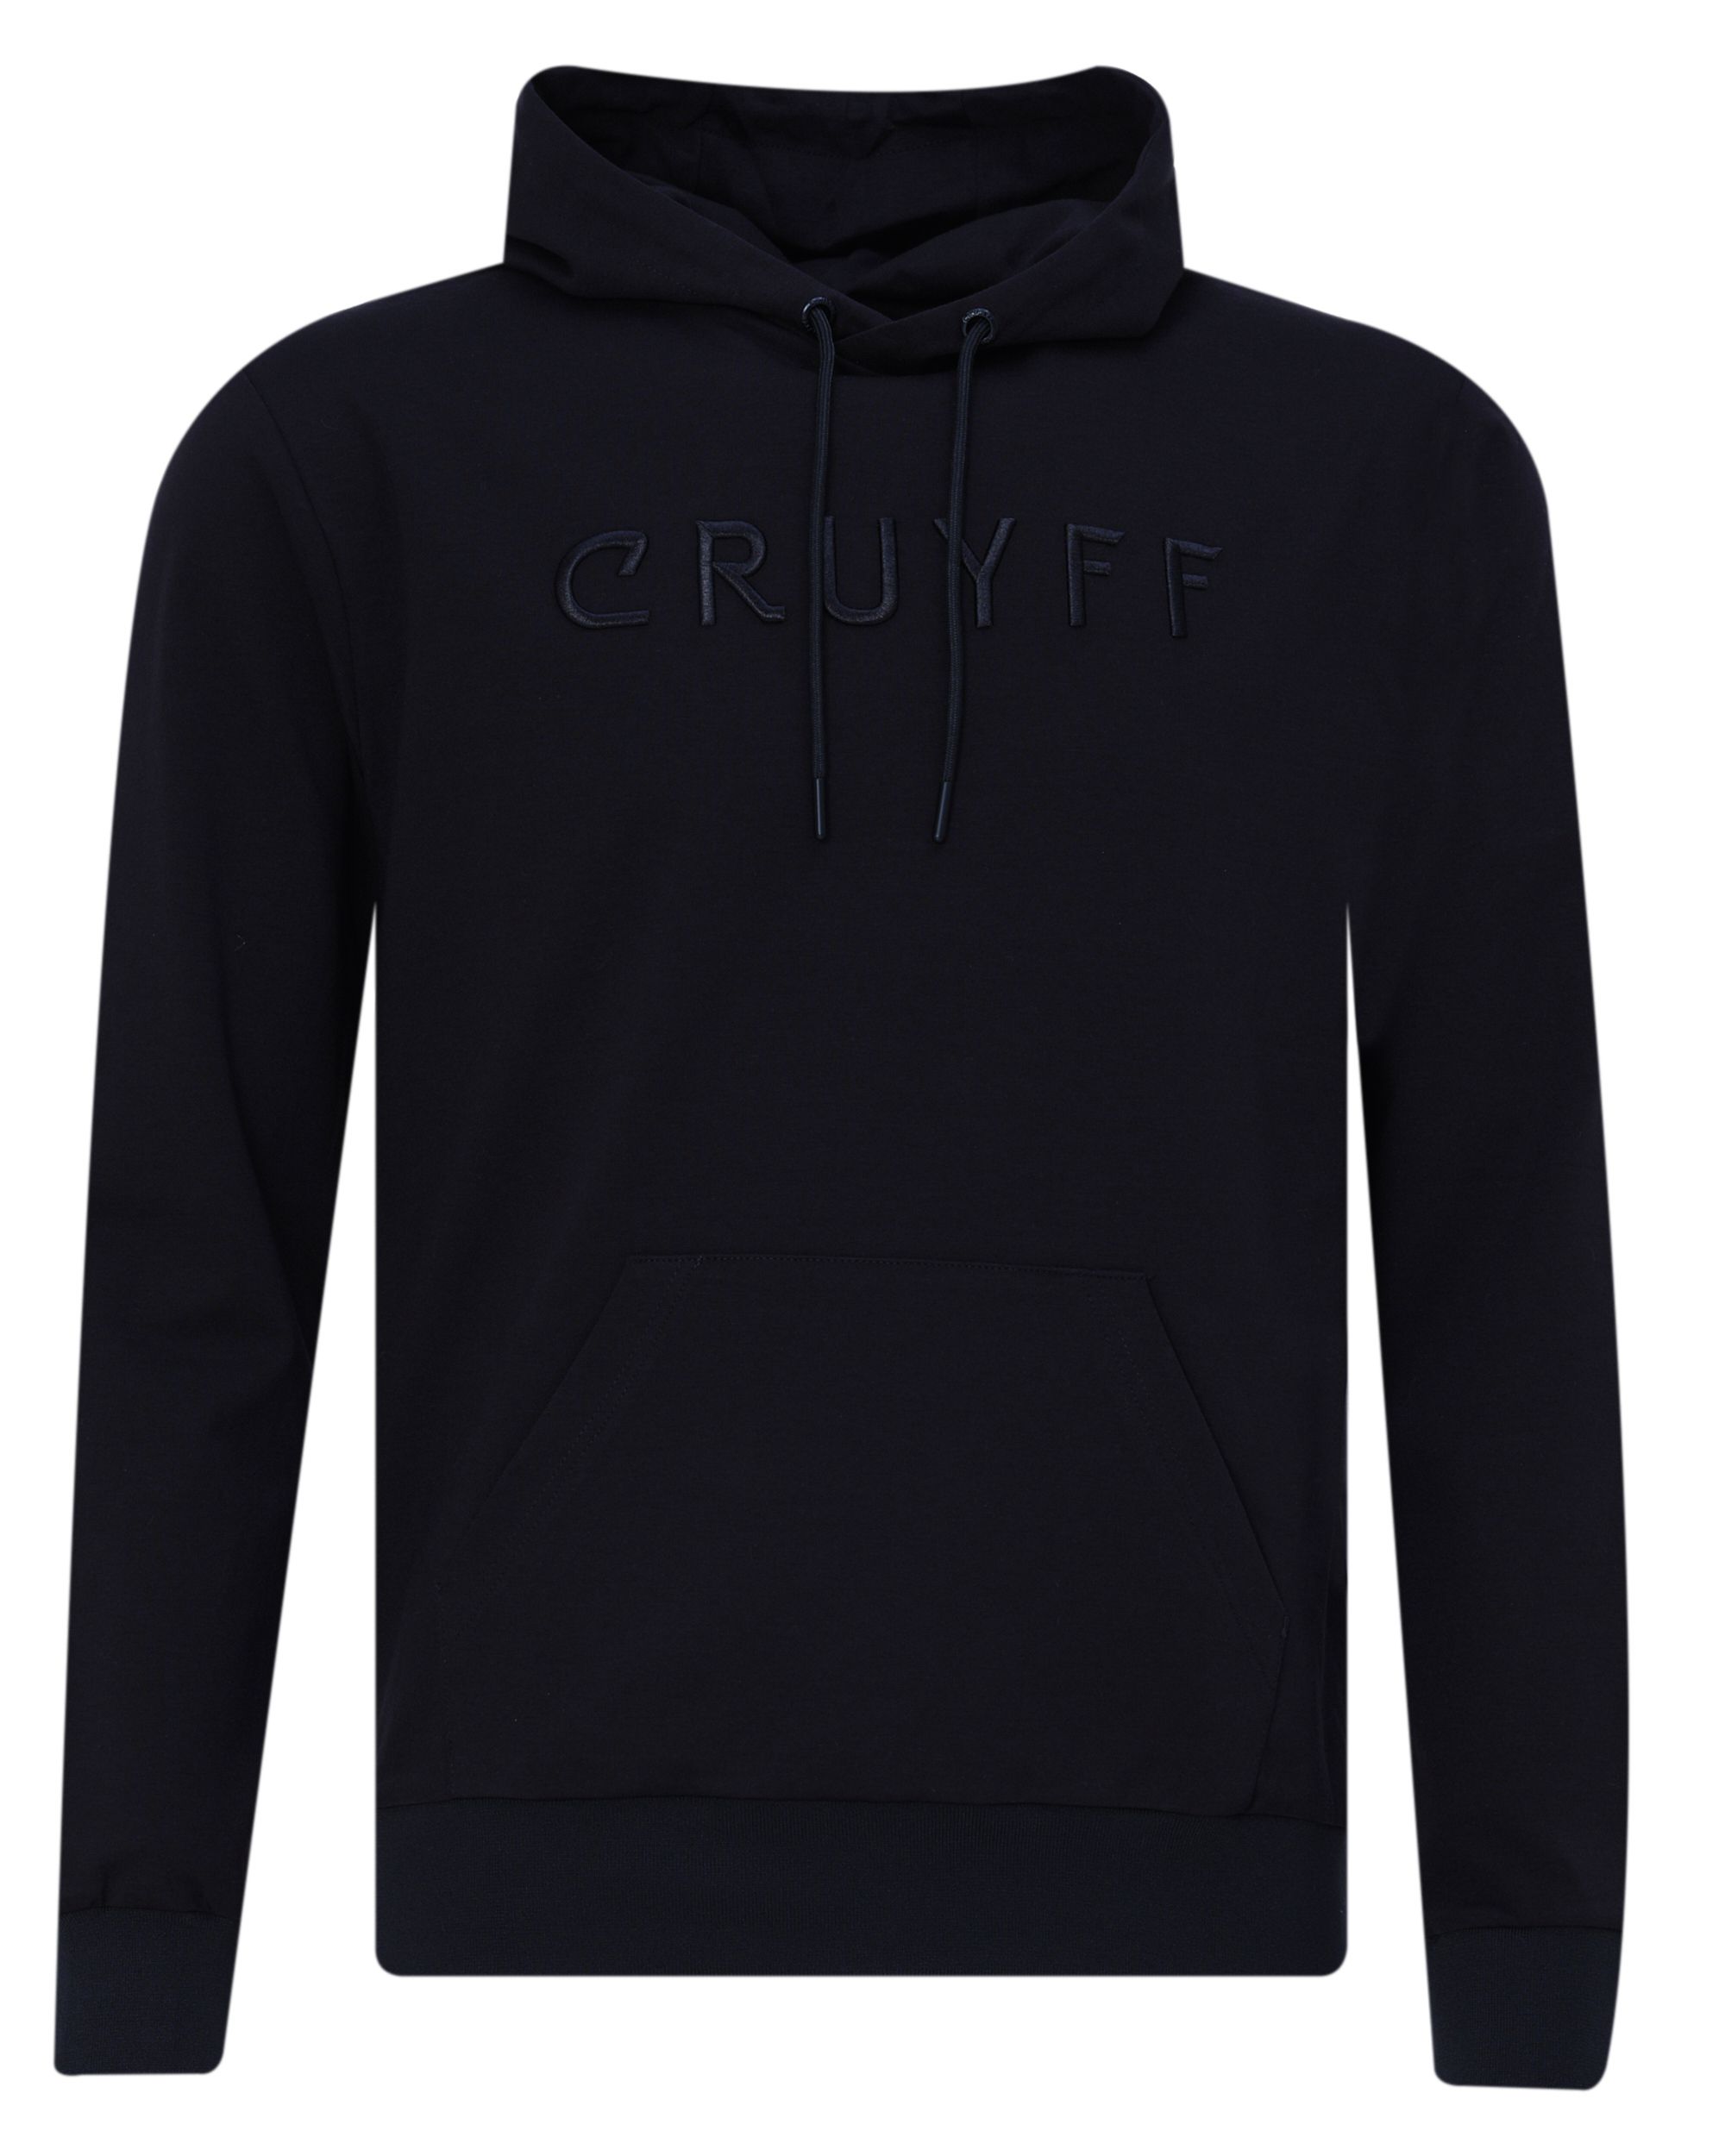 Cruyff Toretta Hoodie Zwart 078812-001-L